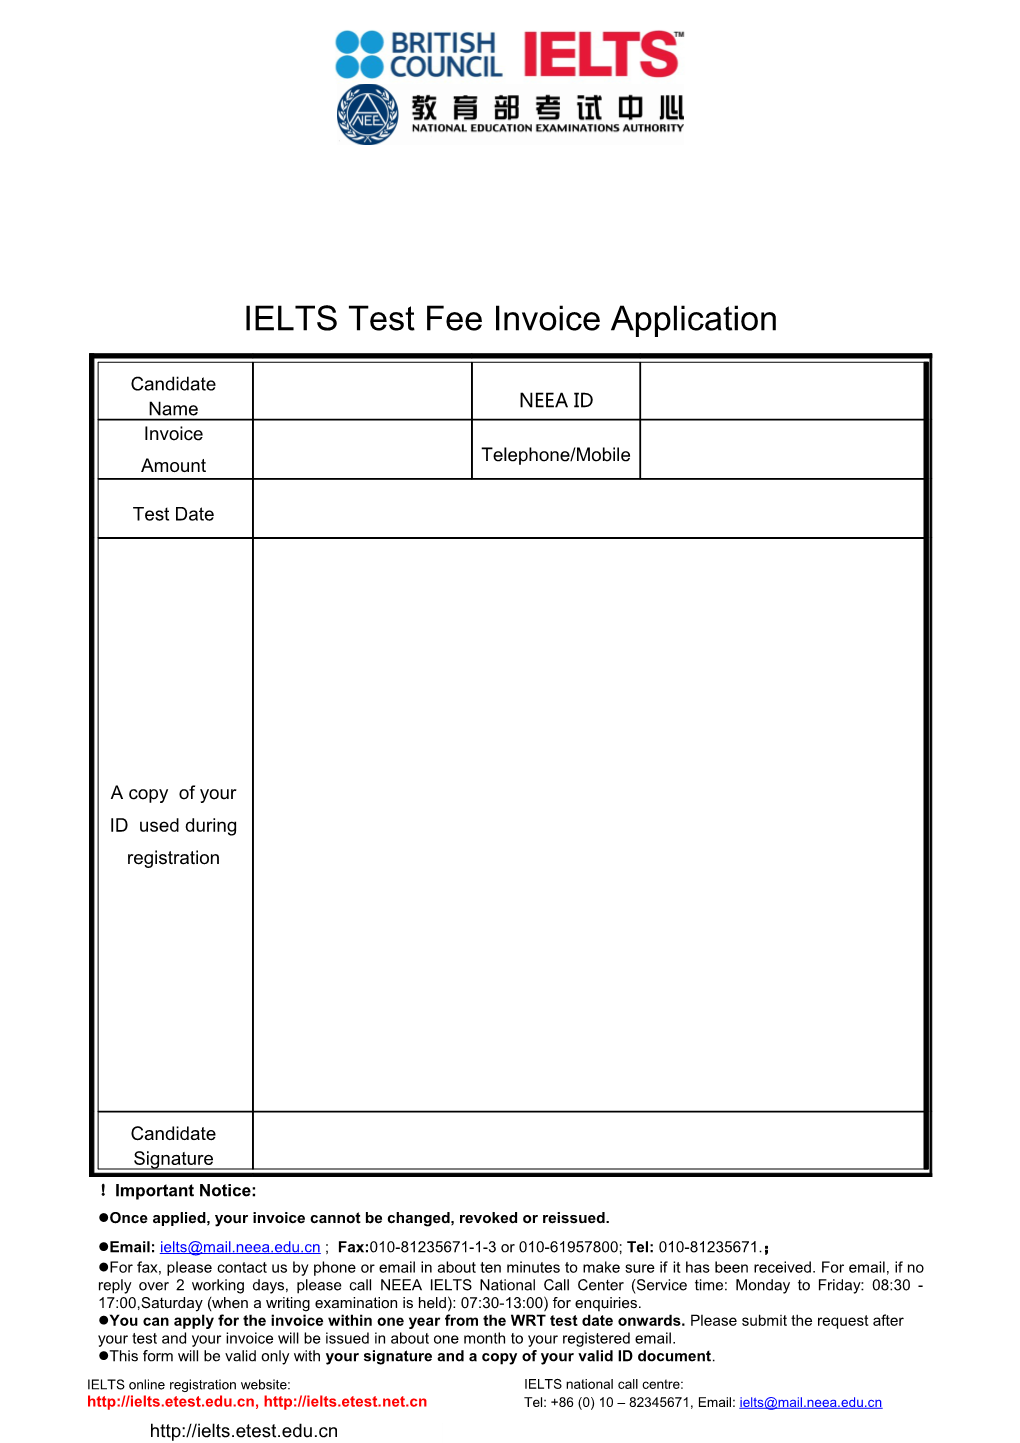 IELTS Test Fee Invoice Application